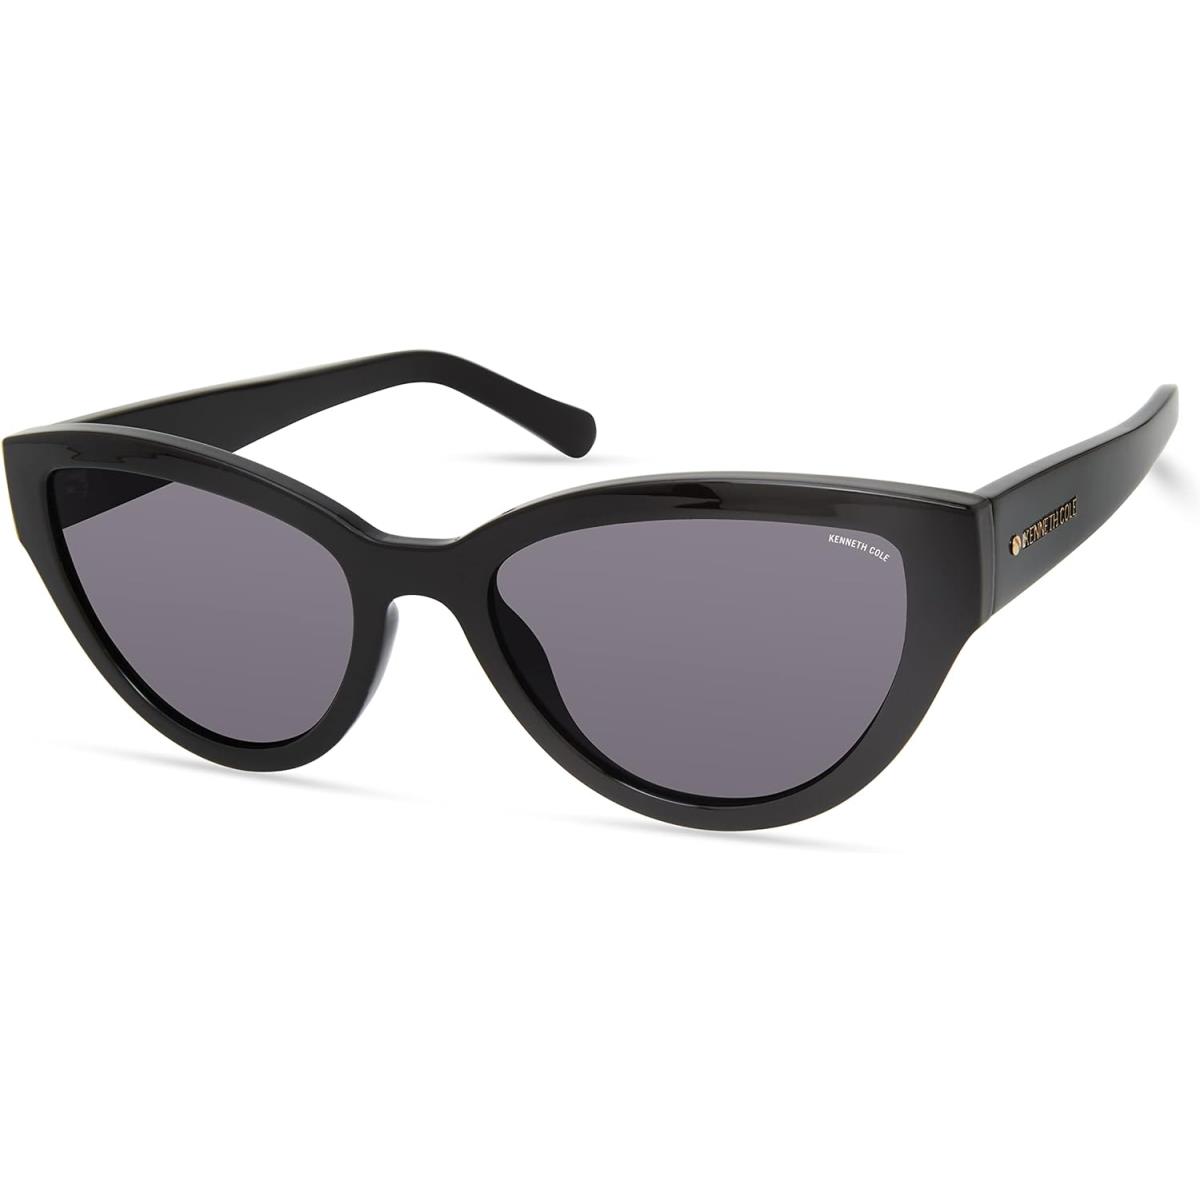 Kenneth Cole Women`s Cat Sunglasses Shiny Black / Smoke